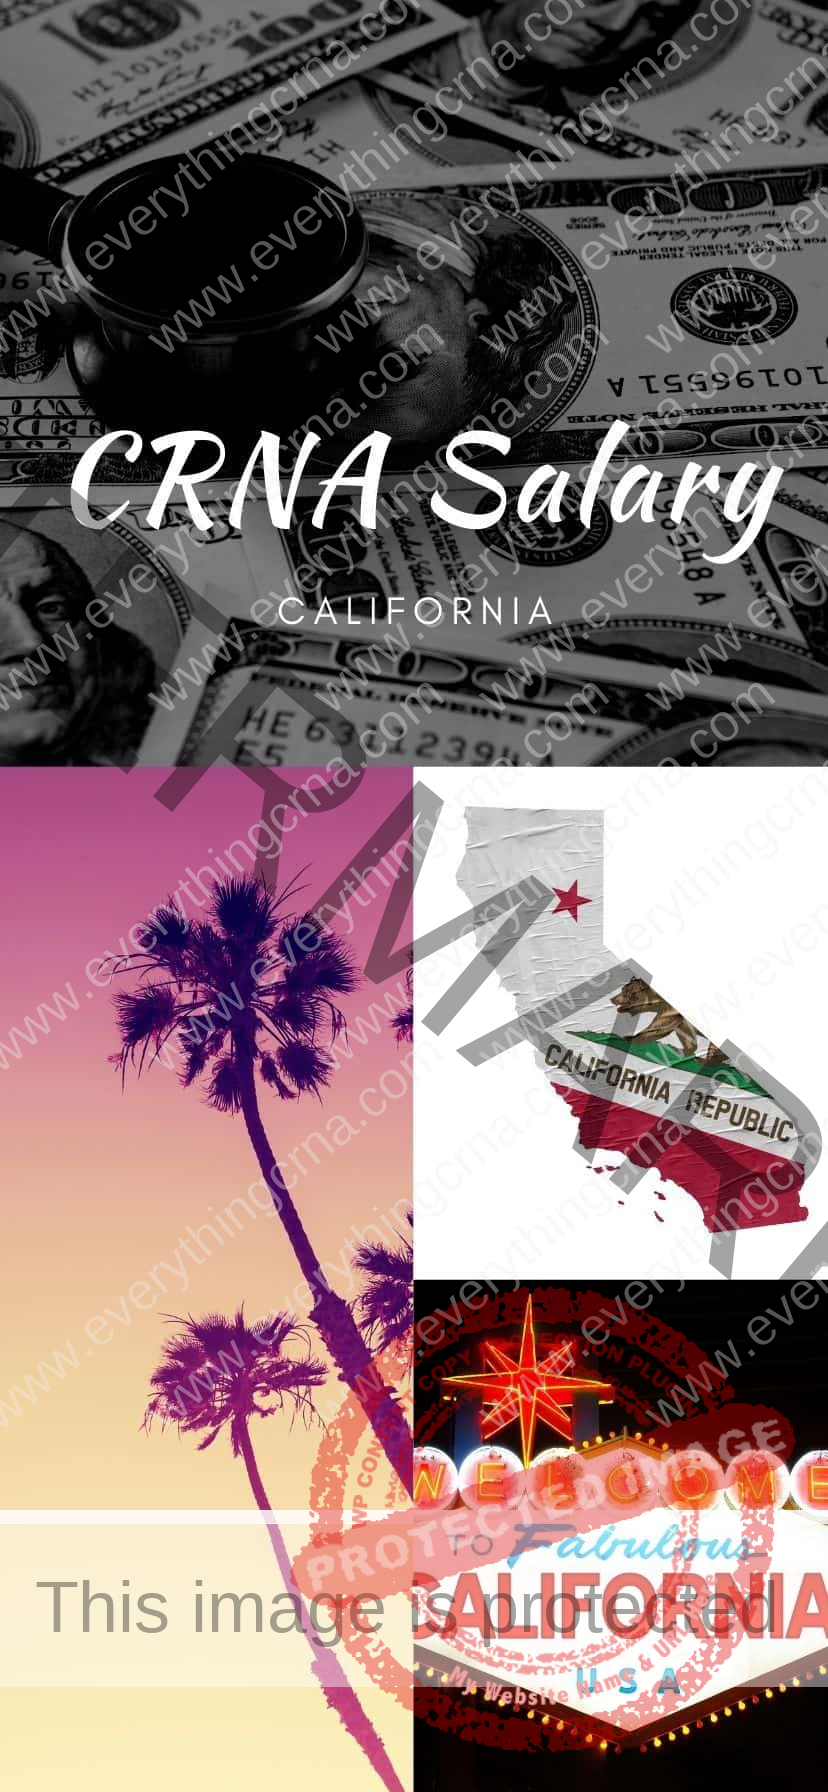 CRNA Salary in California